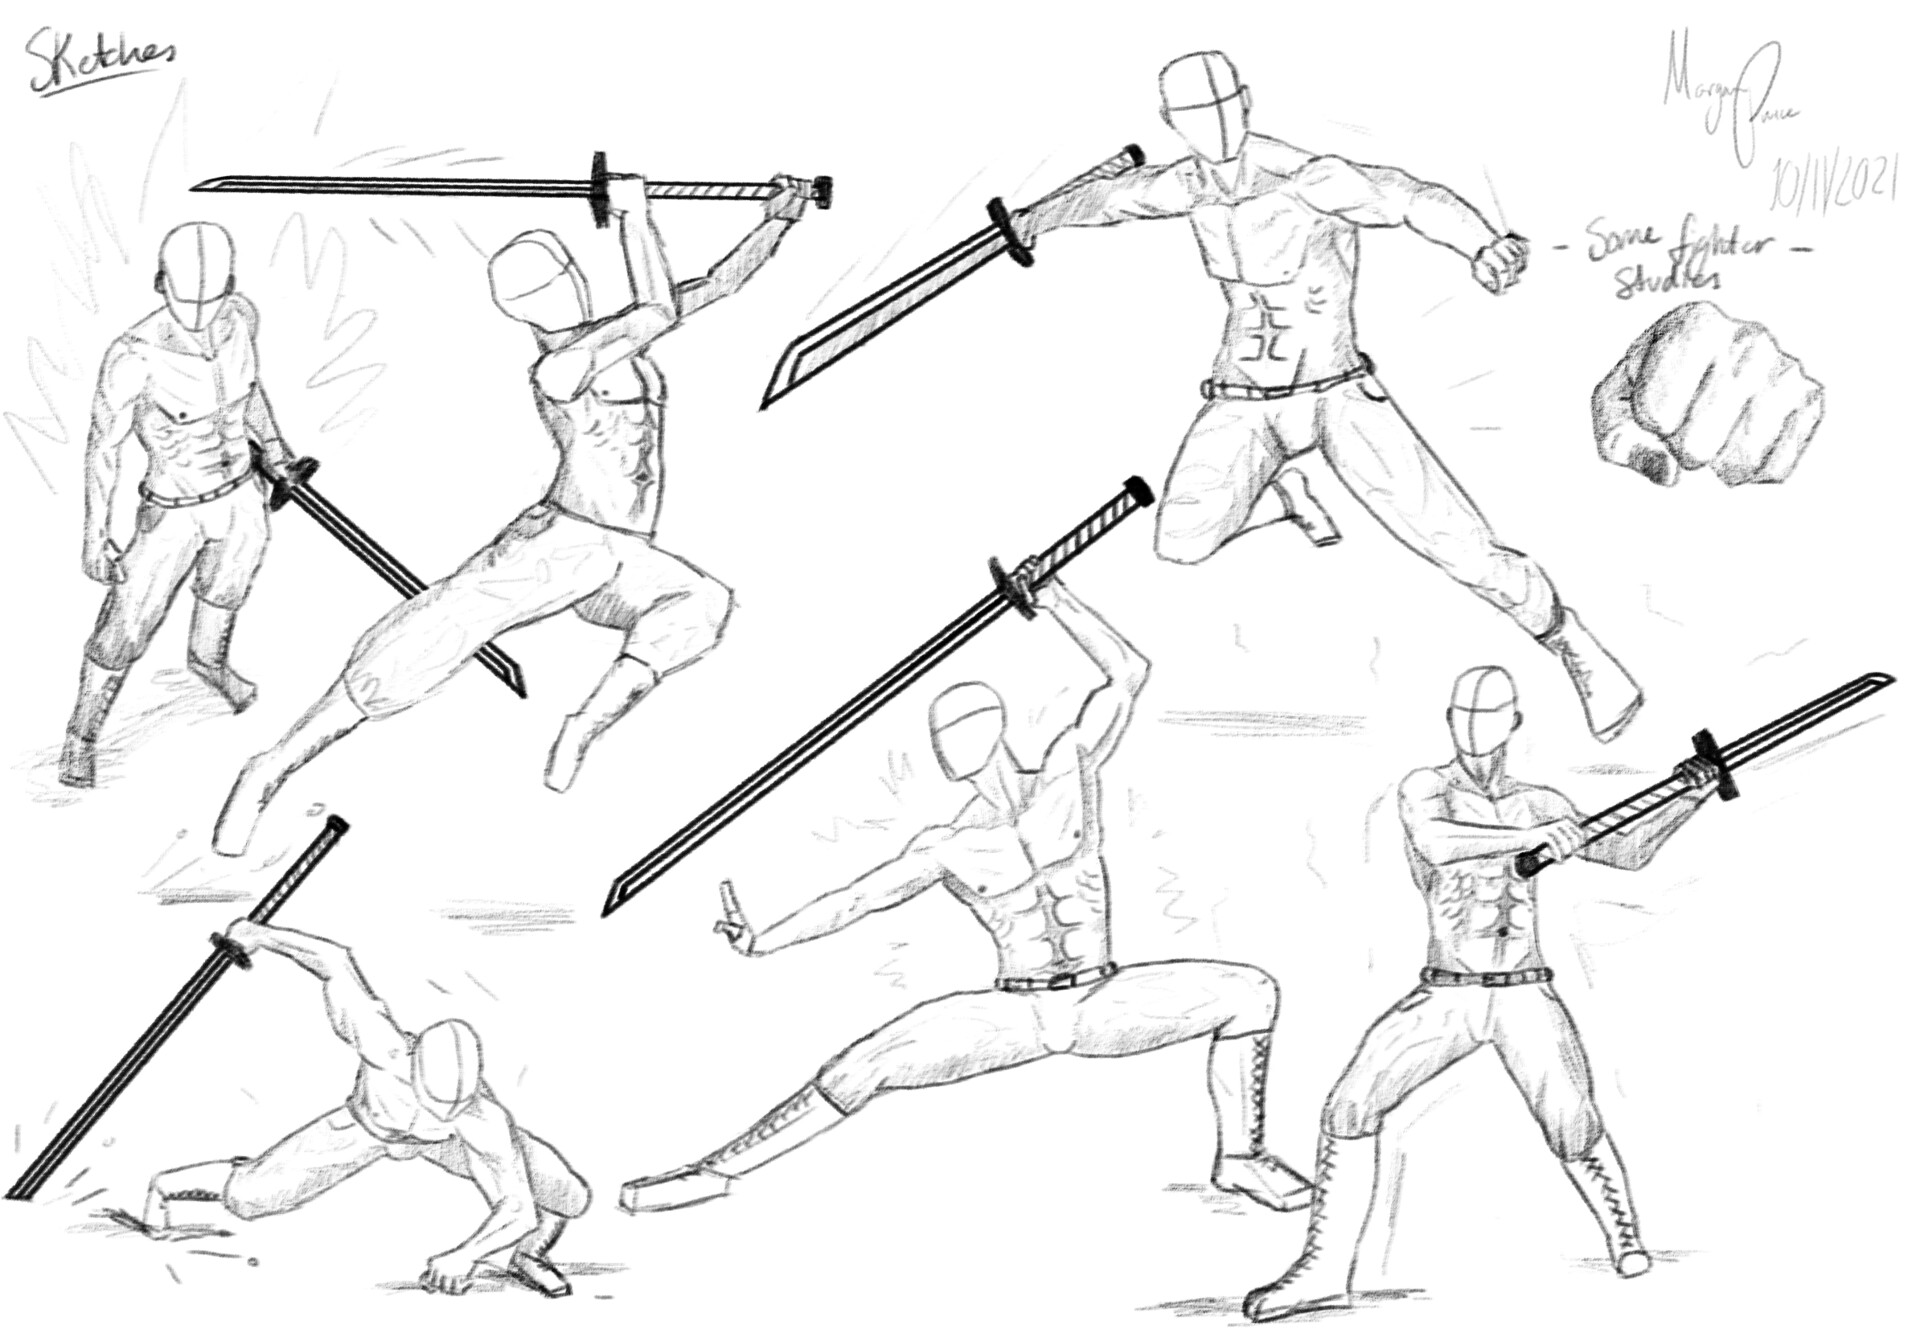 Share 68+ fight pose sketch best - seven.edu.vn